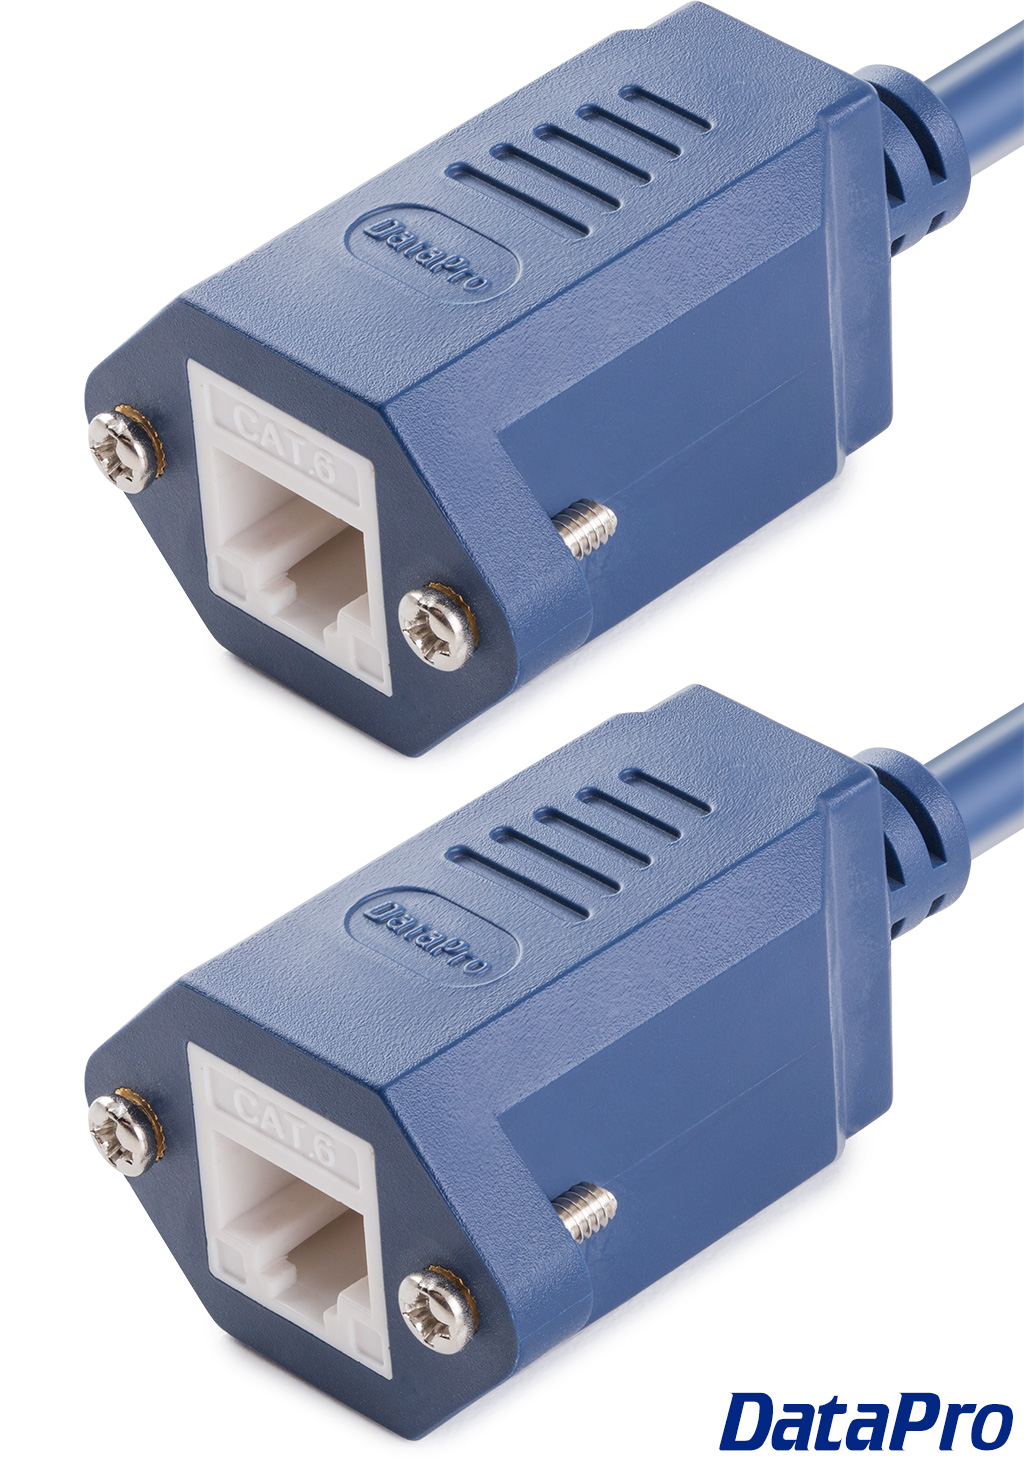 Dual Panel Mount Ethernet RJ45 Cat6 Extension Cable -- DataPro